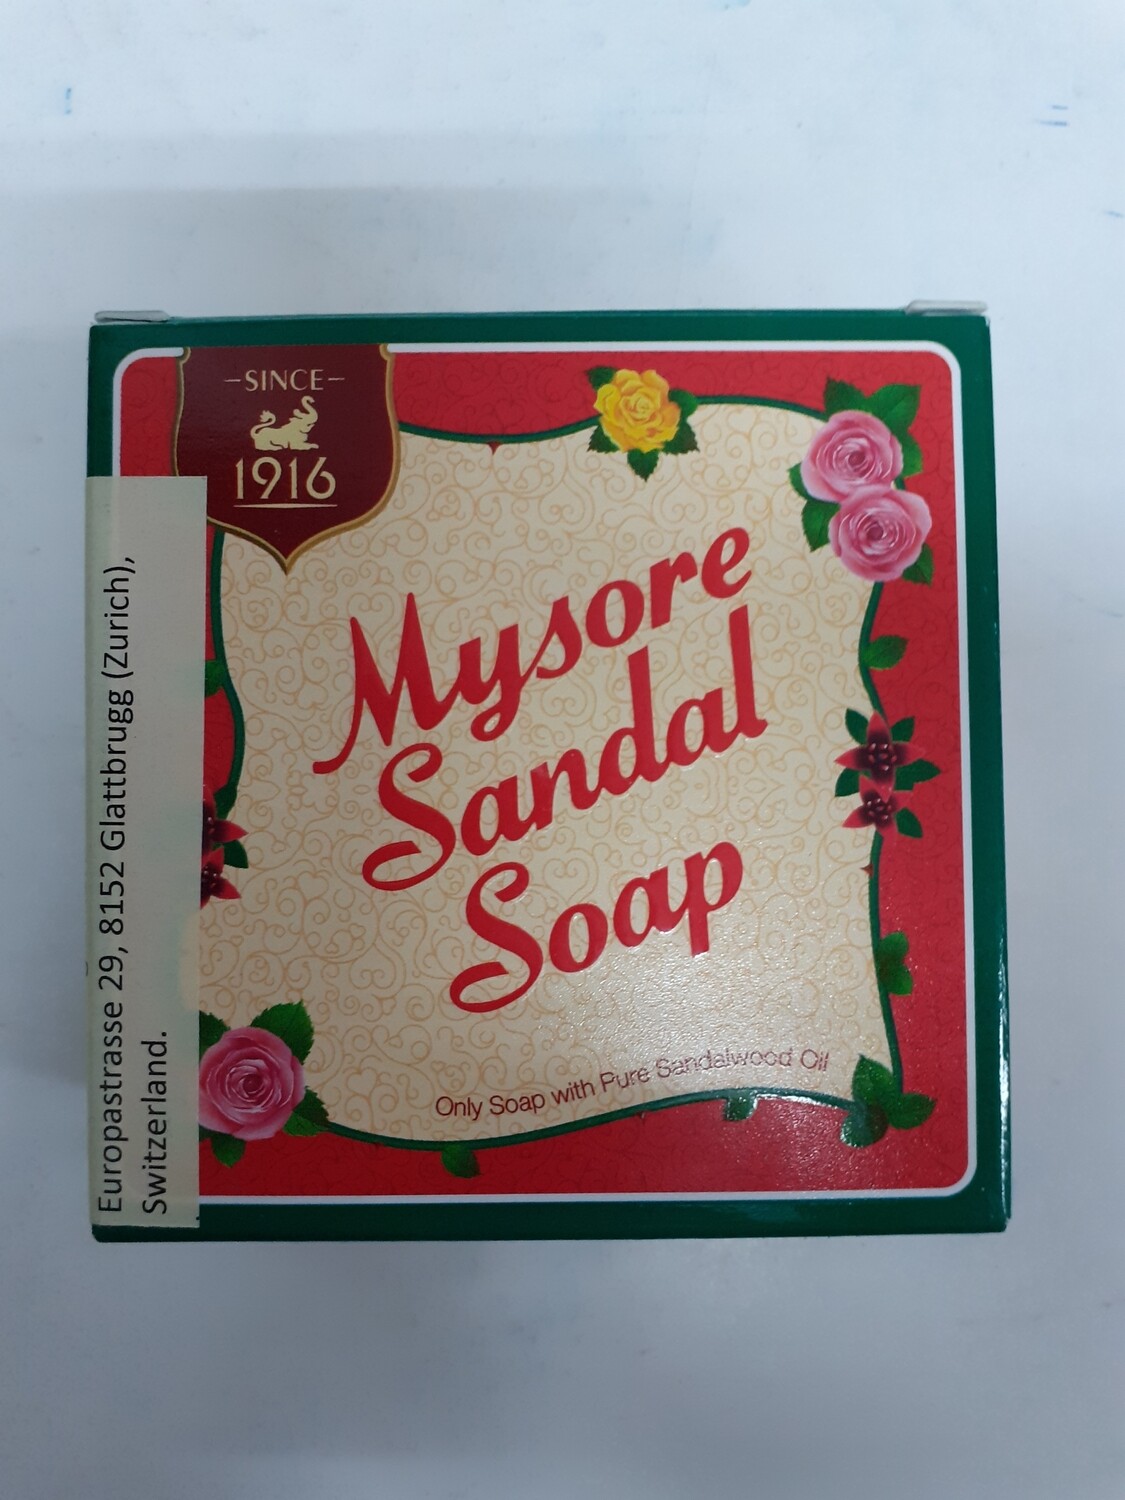 MYSORE SANDAL SOAP 150 g